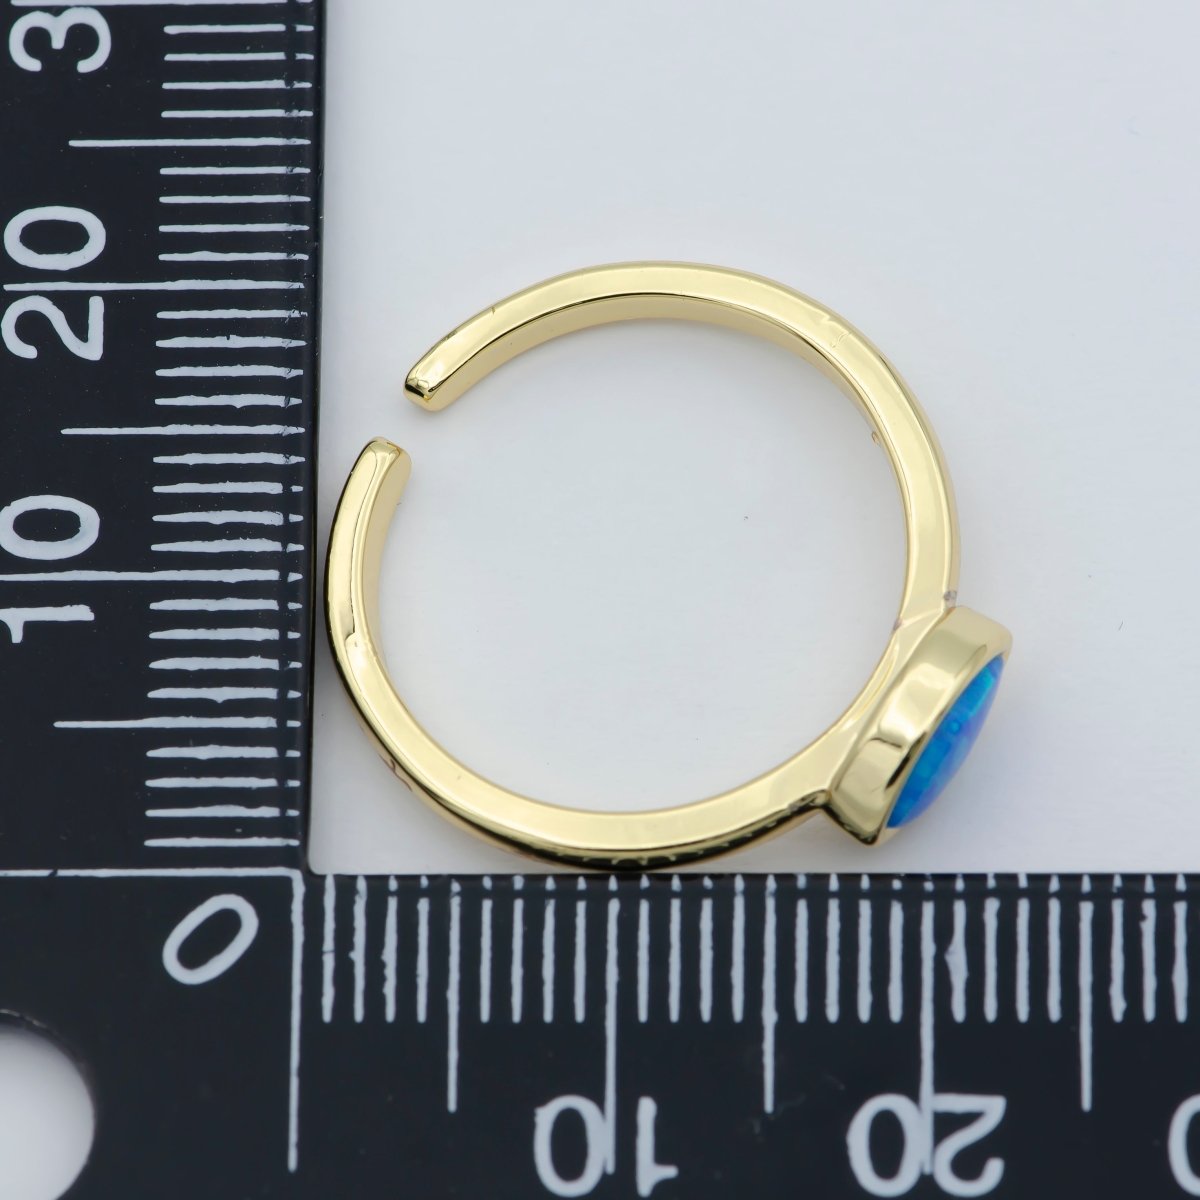 Opal Eye gold ring, Open adjustable Evil eye ring, Dainty gold ring, Delicate ring, Thin gold ring, Simple ring, Minimalist jewelry O-880 - DLUXCA